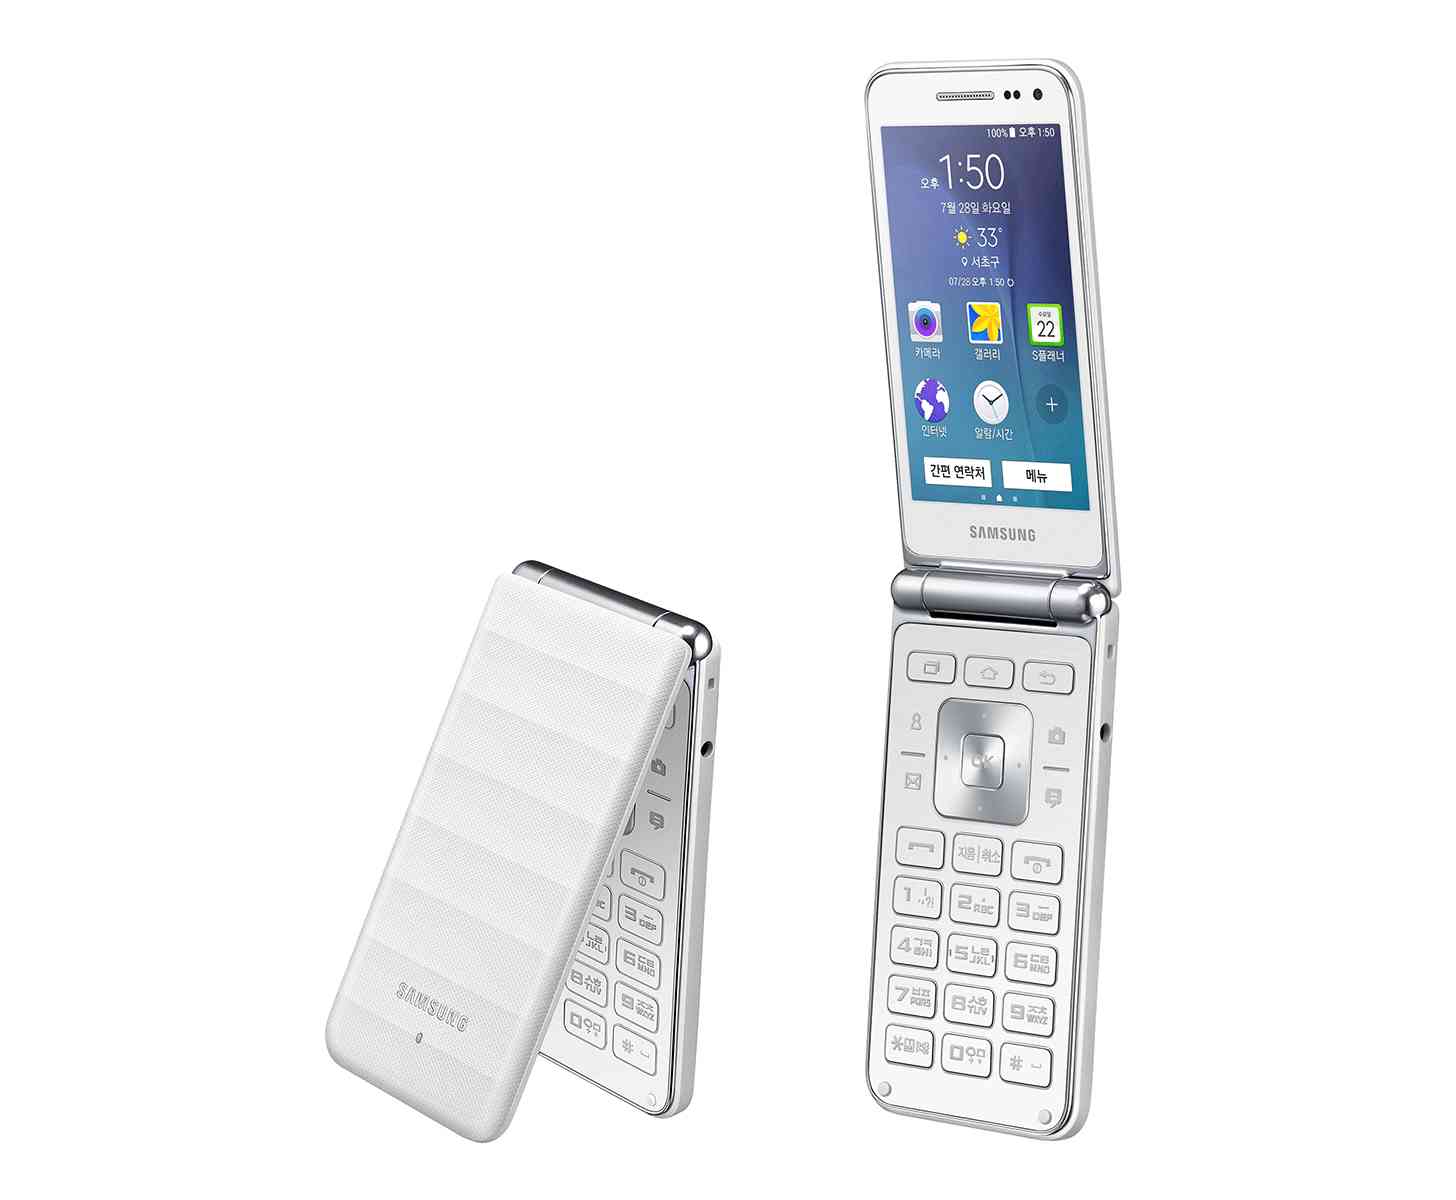 Samsung Galaxy Folder Android flip phone white large